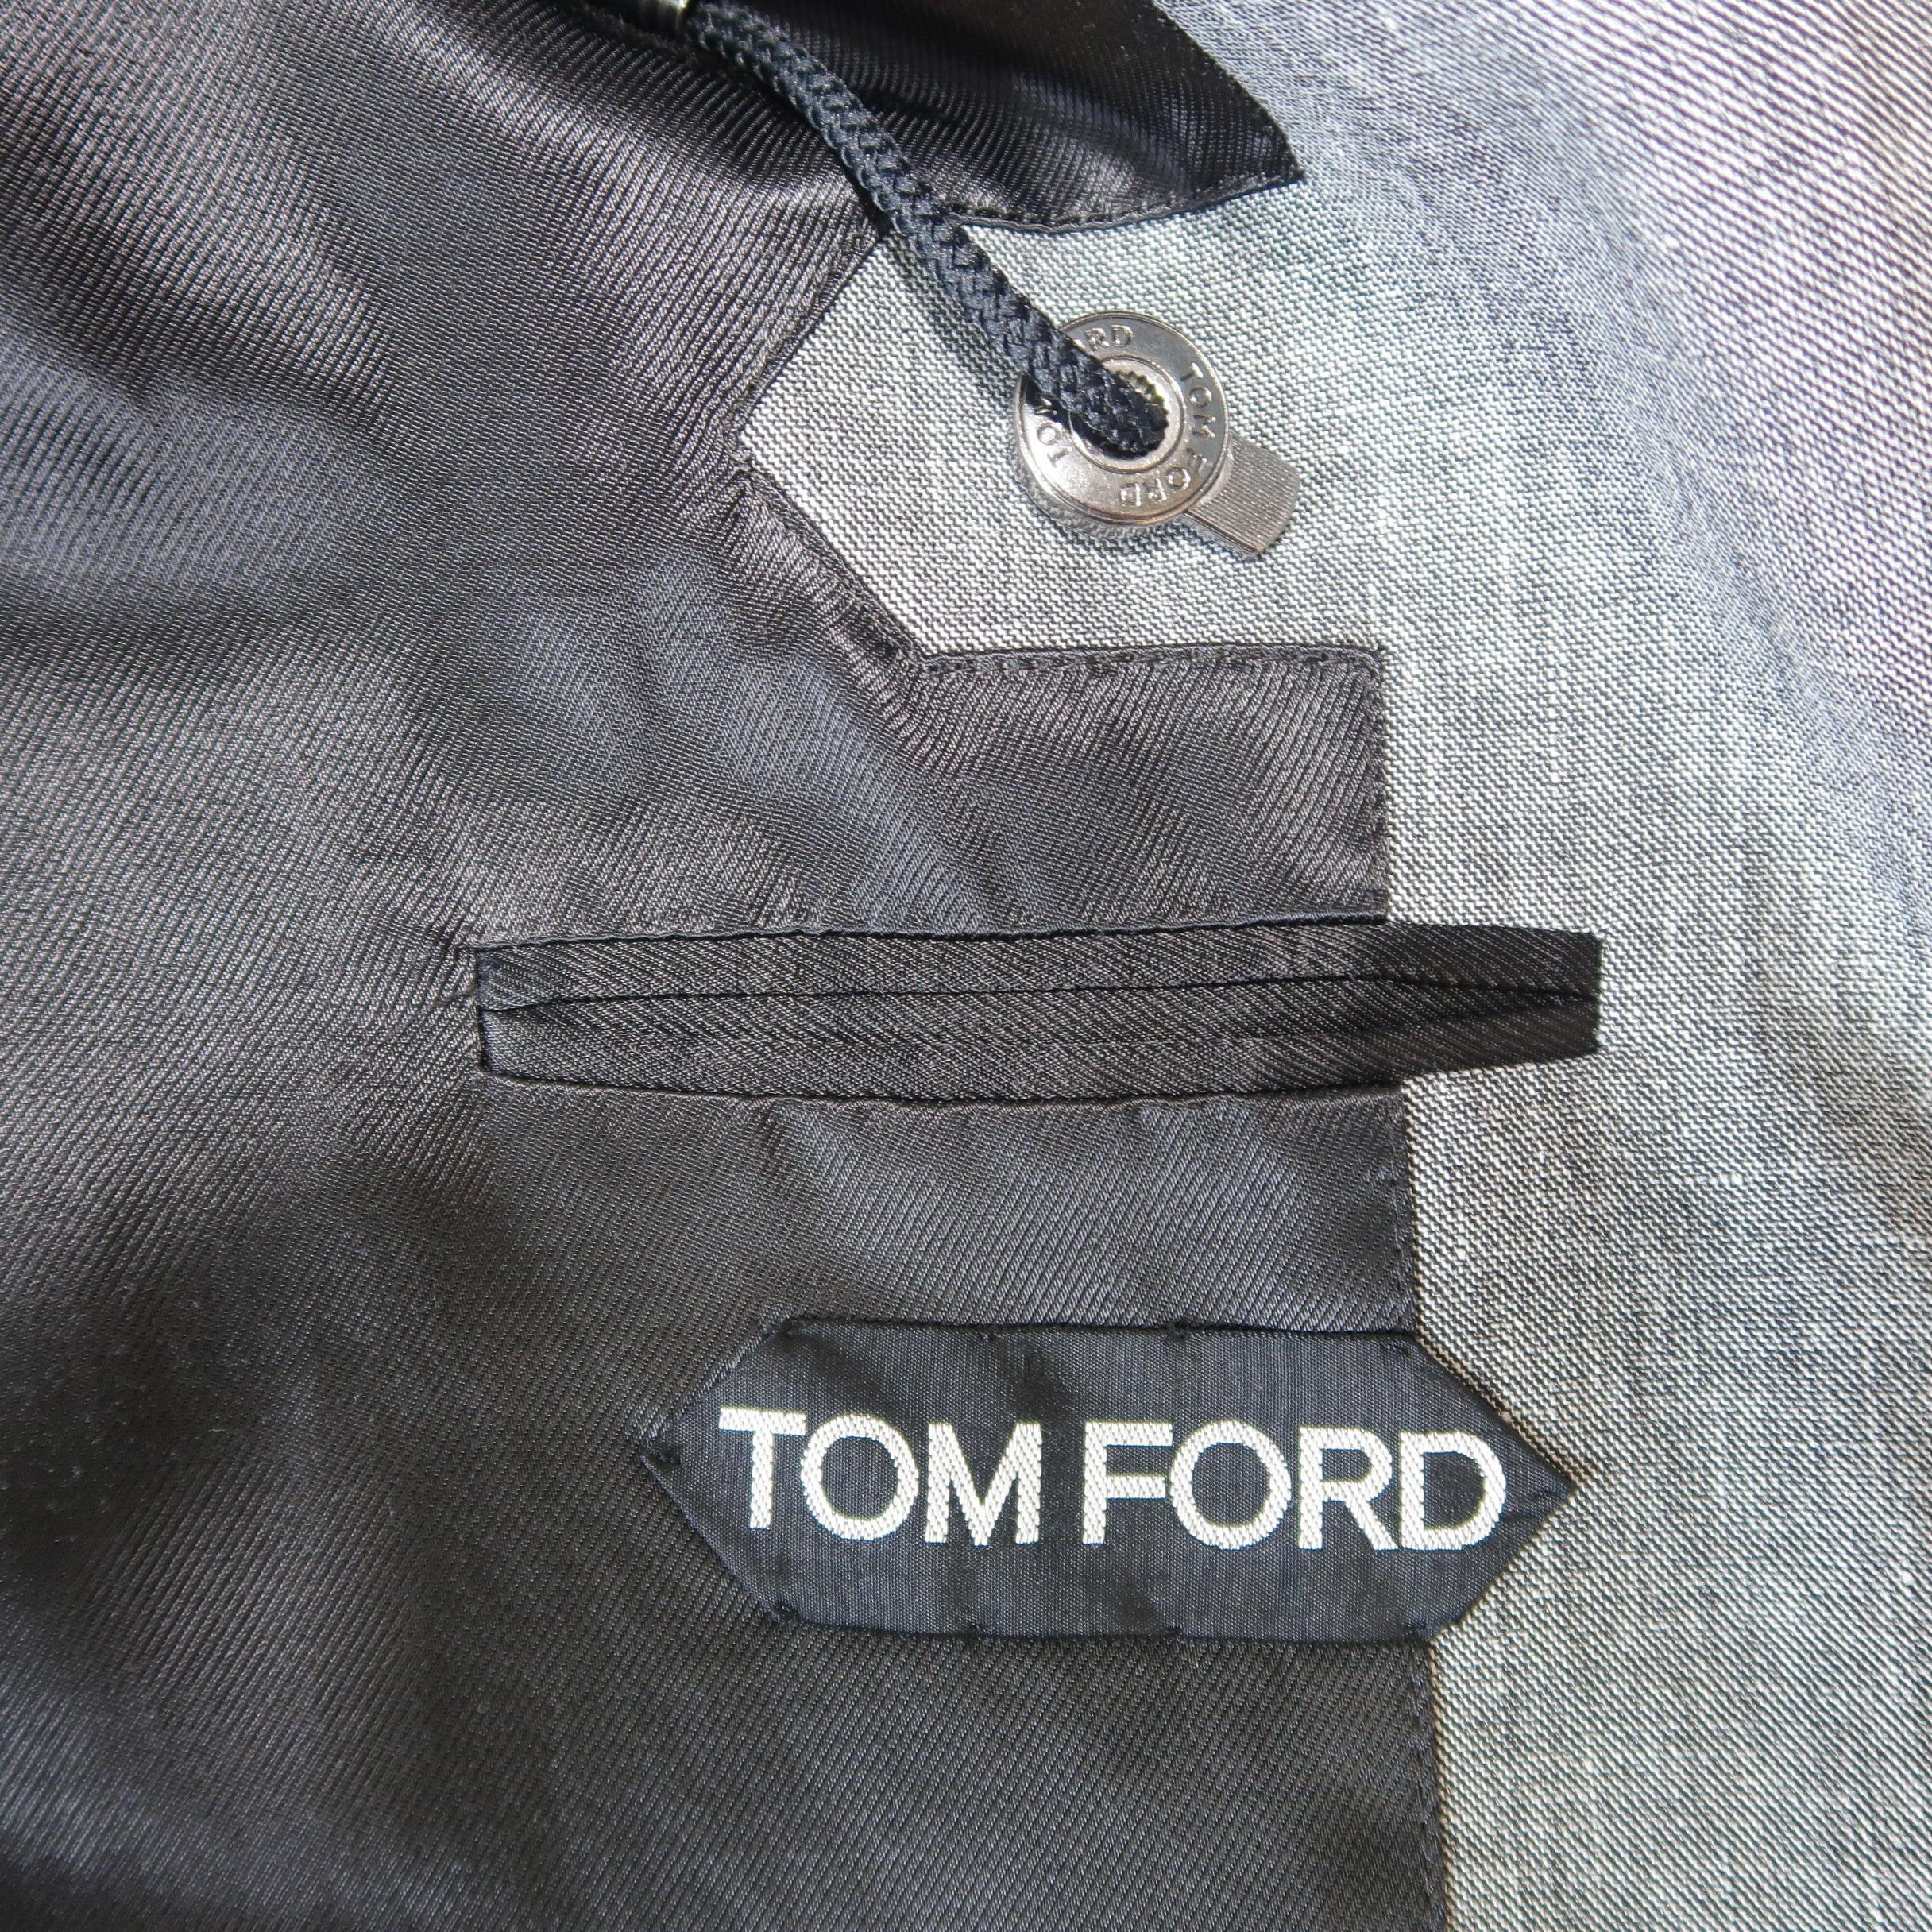 TOM FORD 46 Heather Gray Linen / Wool / Silk Parka Jacket 6